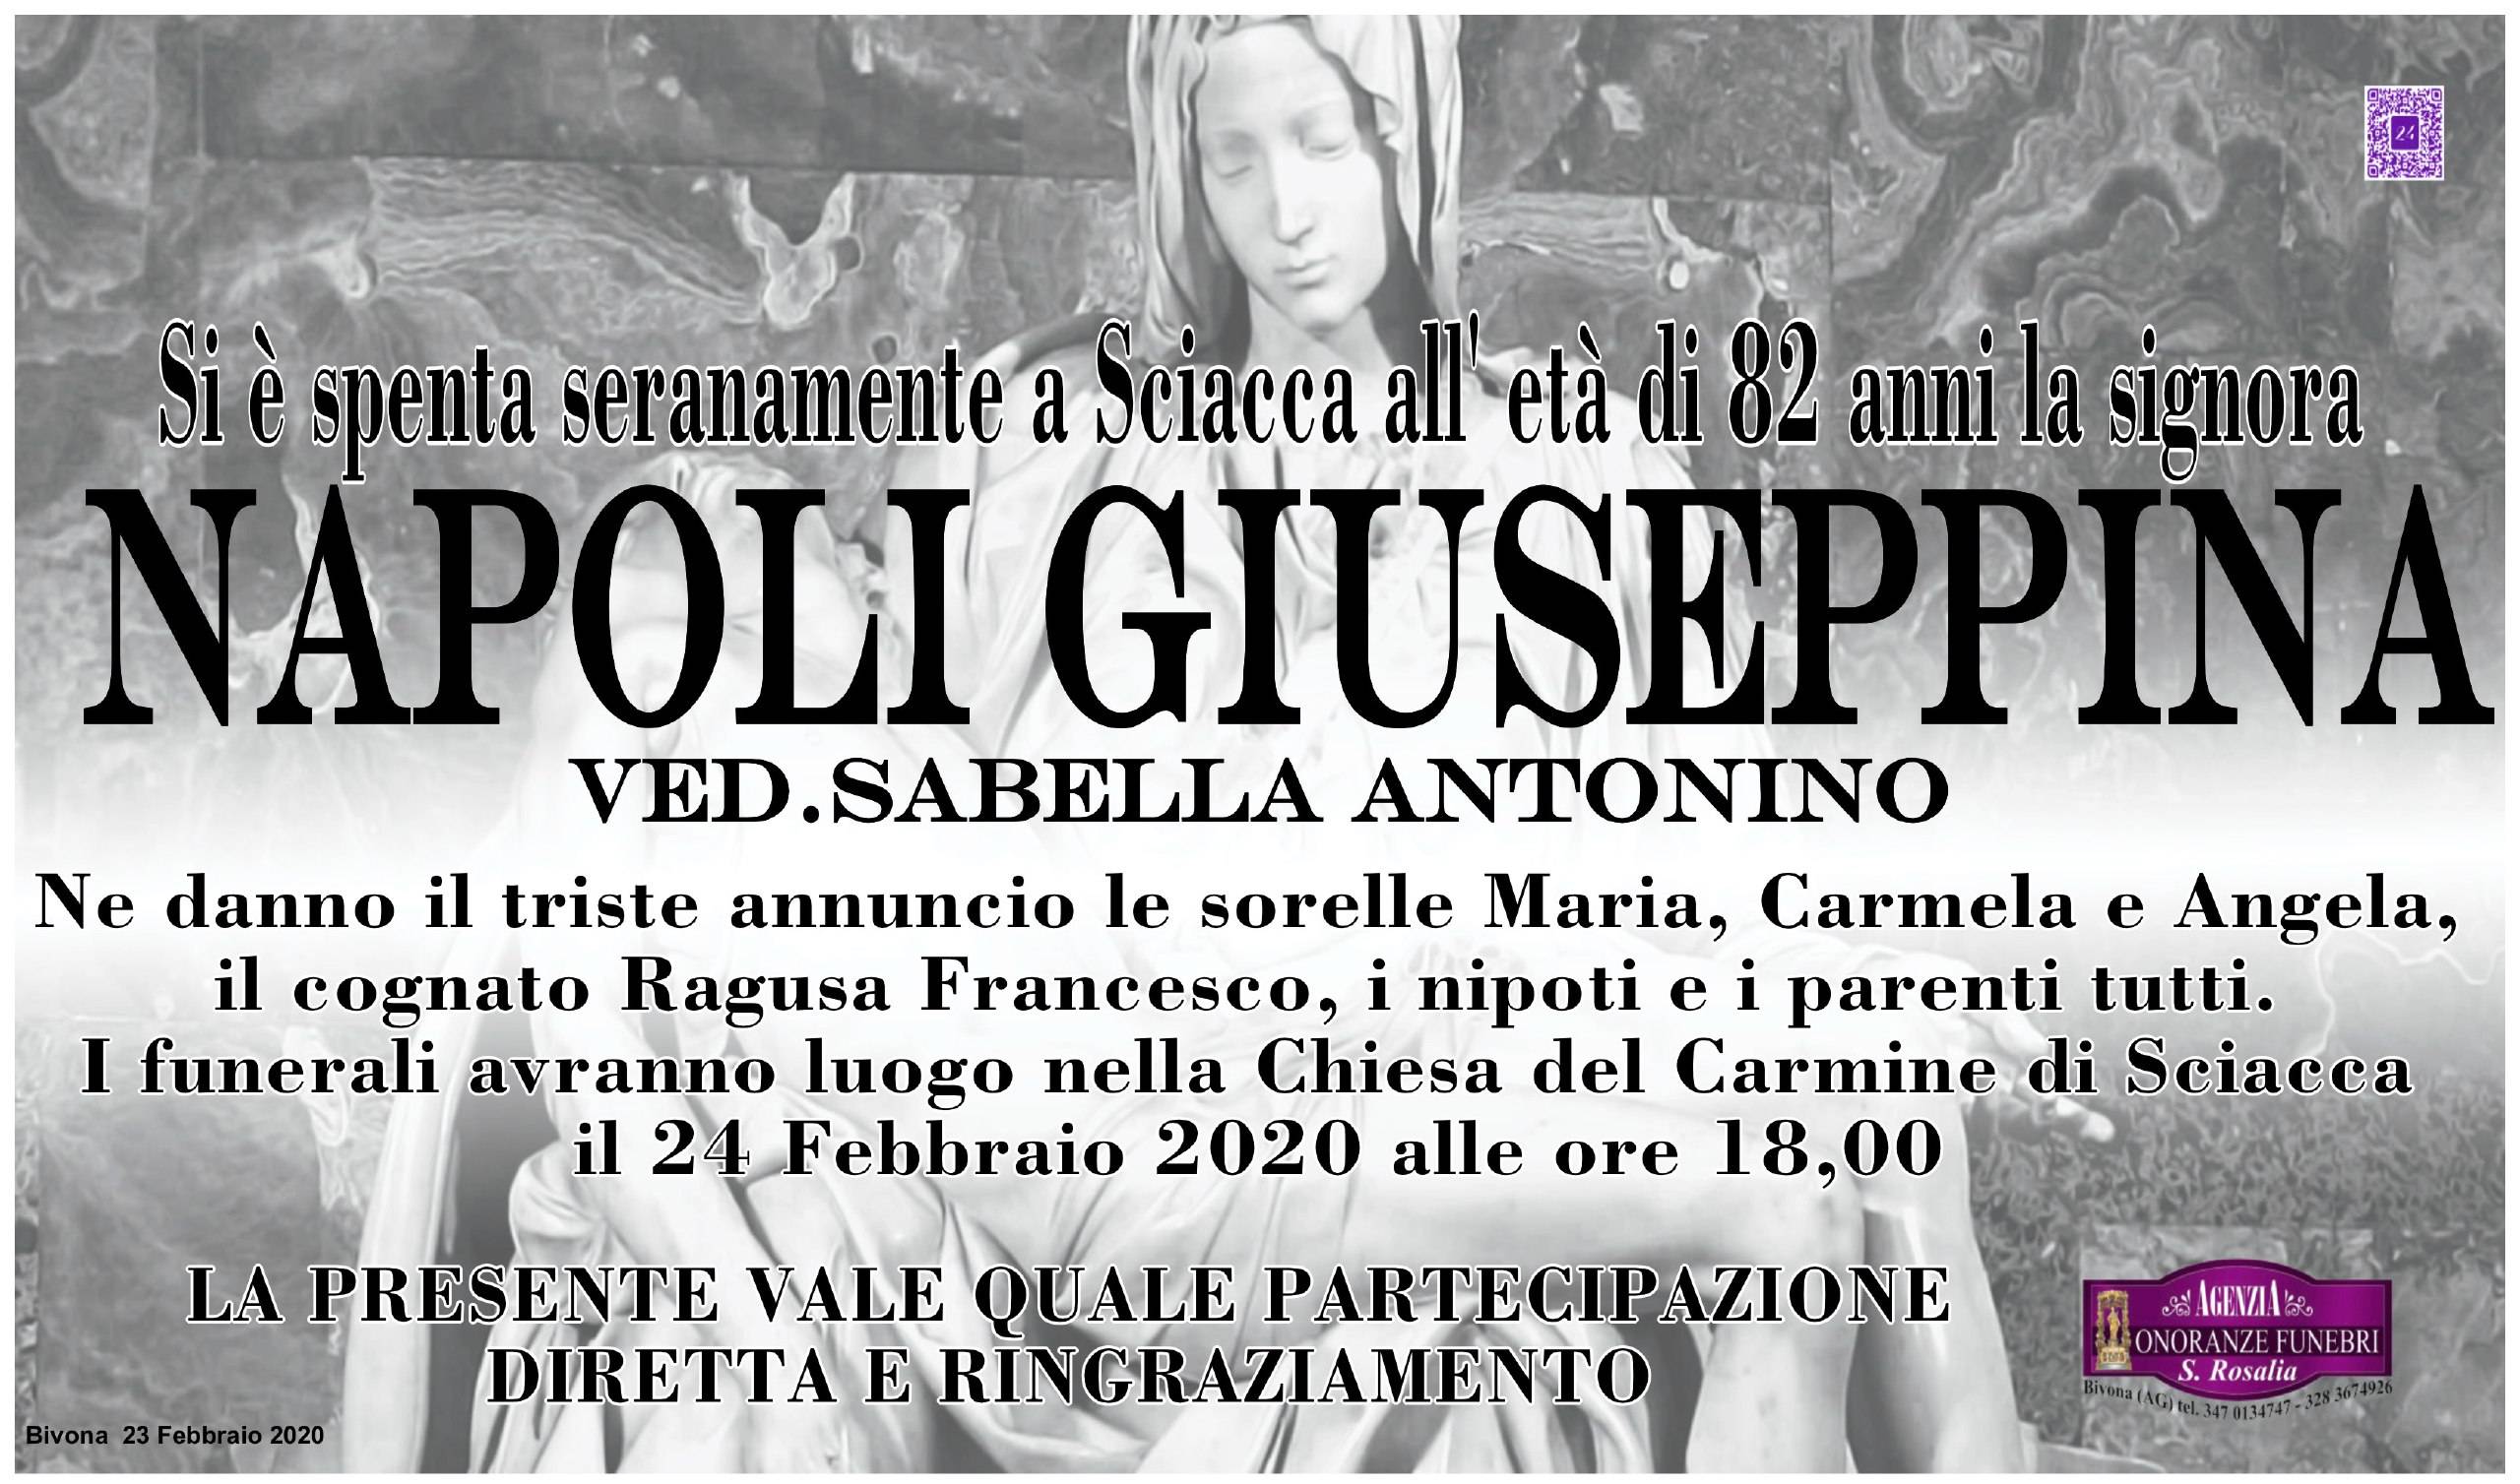 Giuseppina Napoli